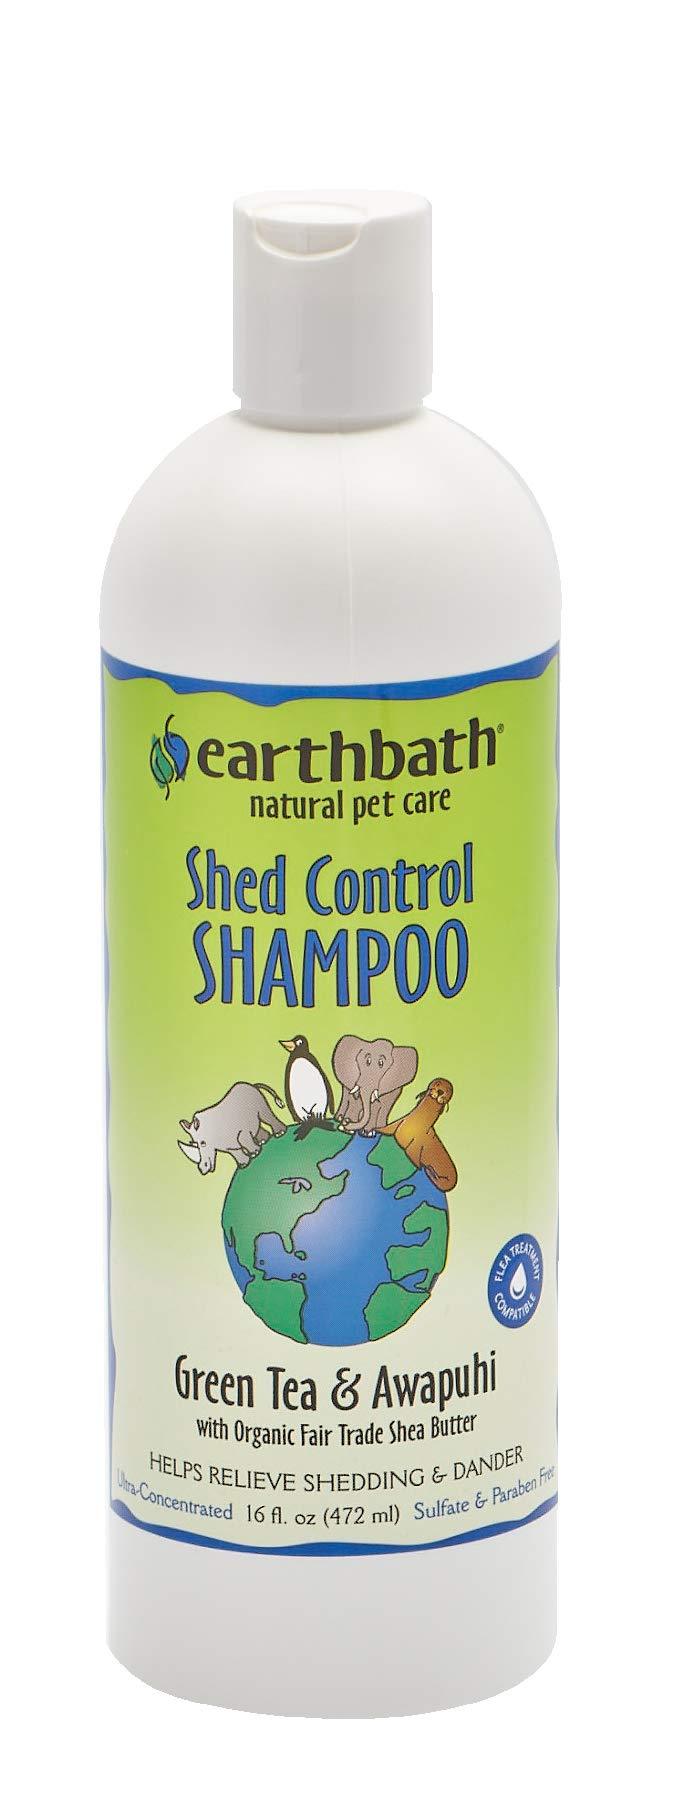 [Australia] - Earthbath Shed Control Shampoo for Pets Pack of 1 